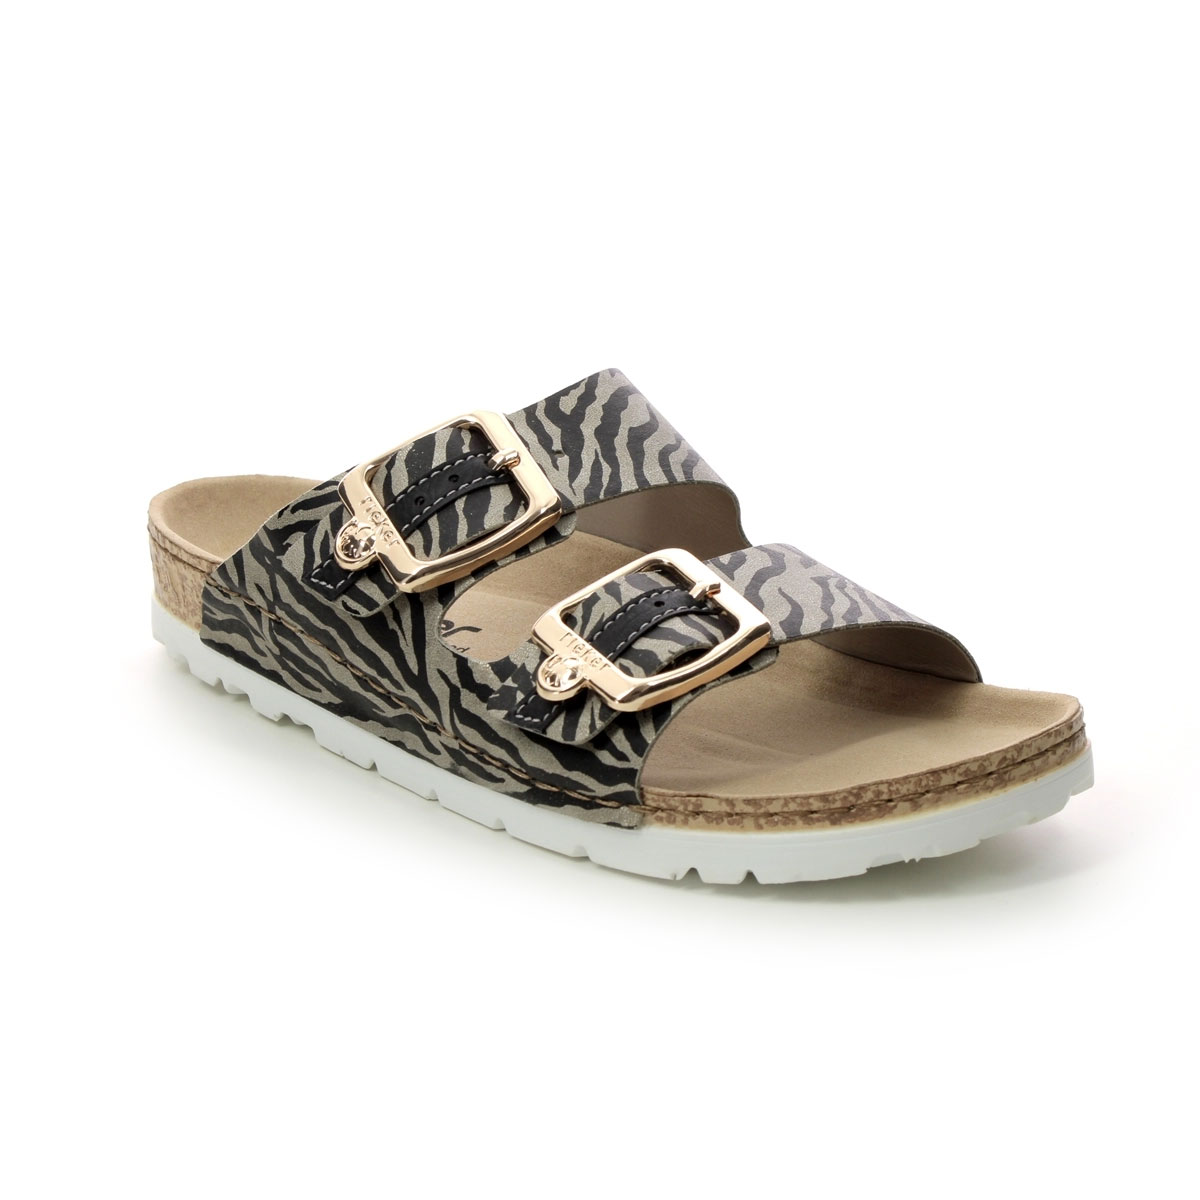 Rieker 69850-60 Zebra print Womens Slide Sandals in a Plain Man-made in Size 43